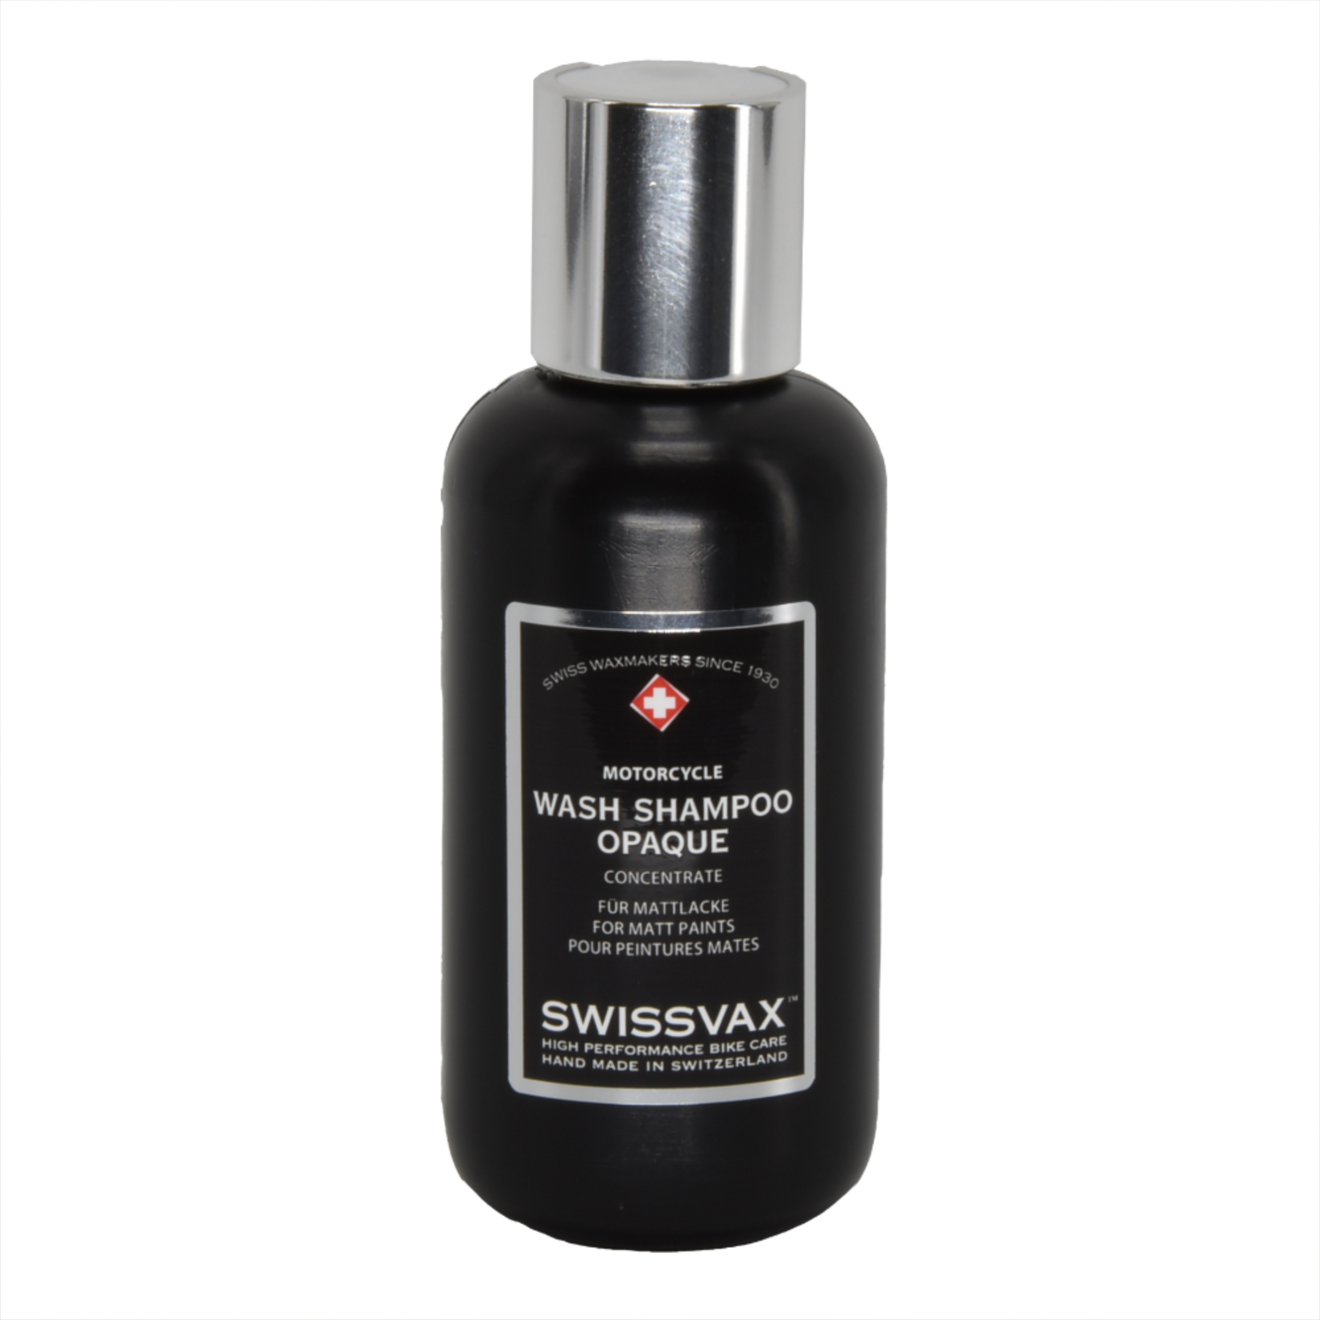 Swissvax Motorcycle Wash Opaque shampoo	